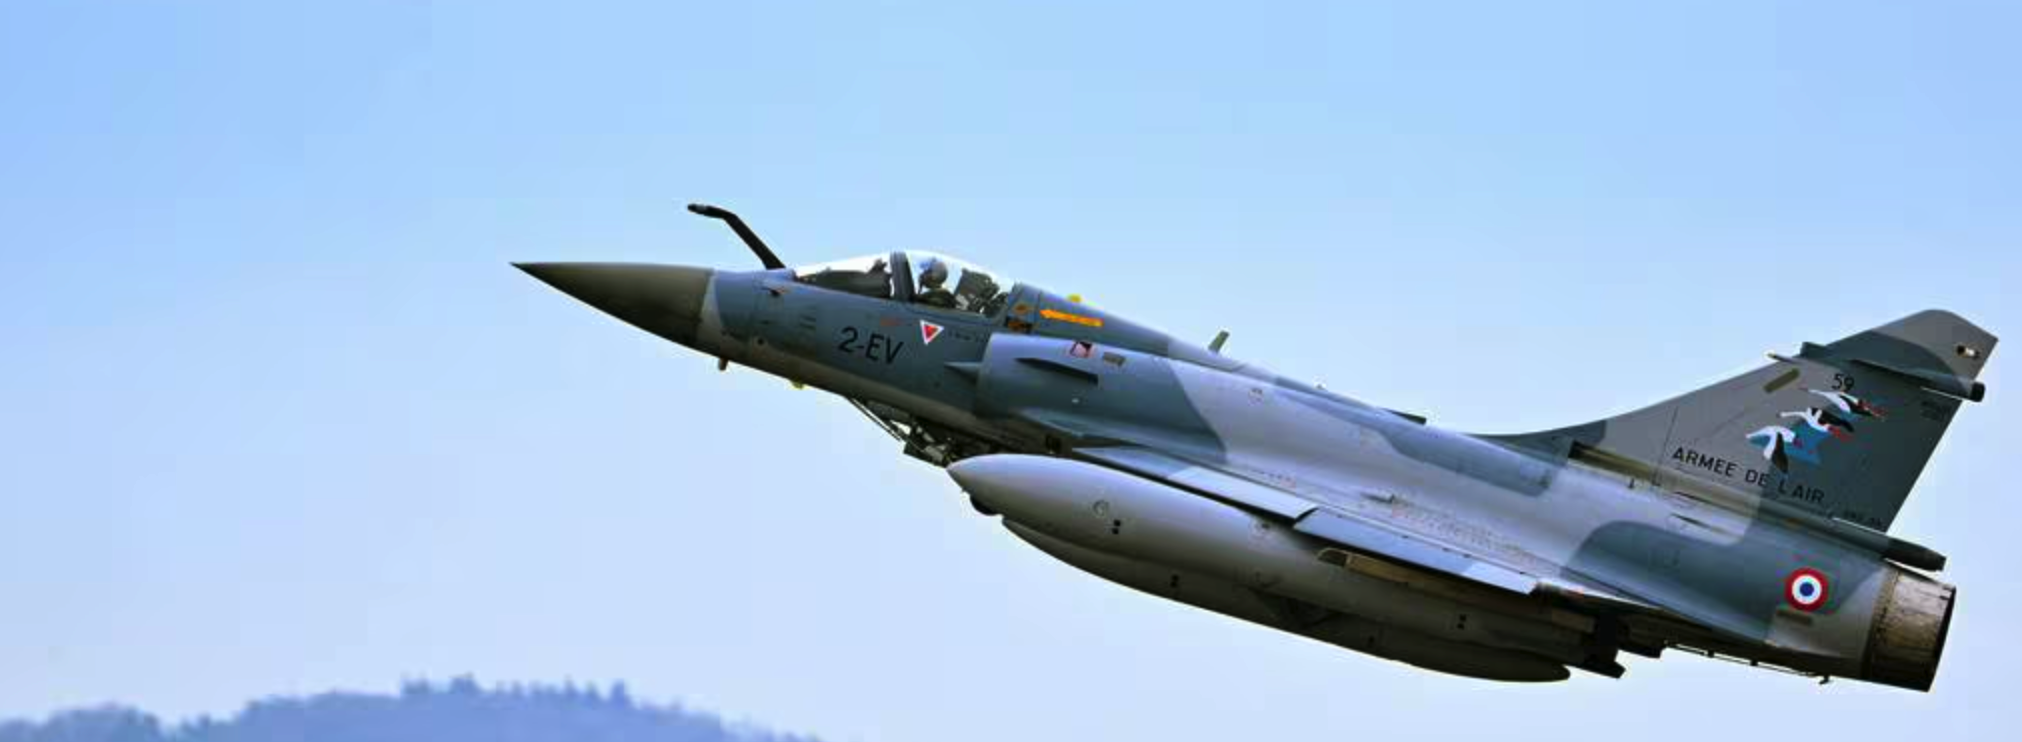 France to deliver Mirage 2000-5 fighter jets to Ukraine